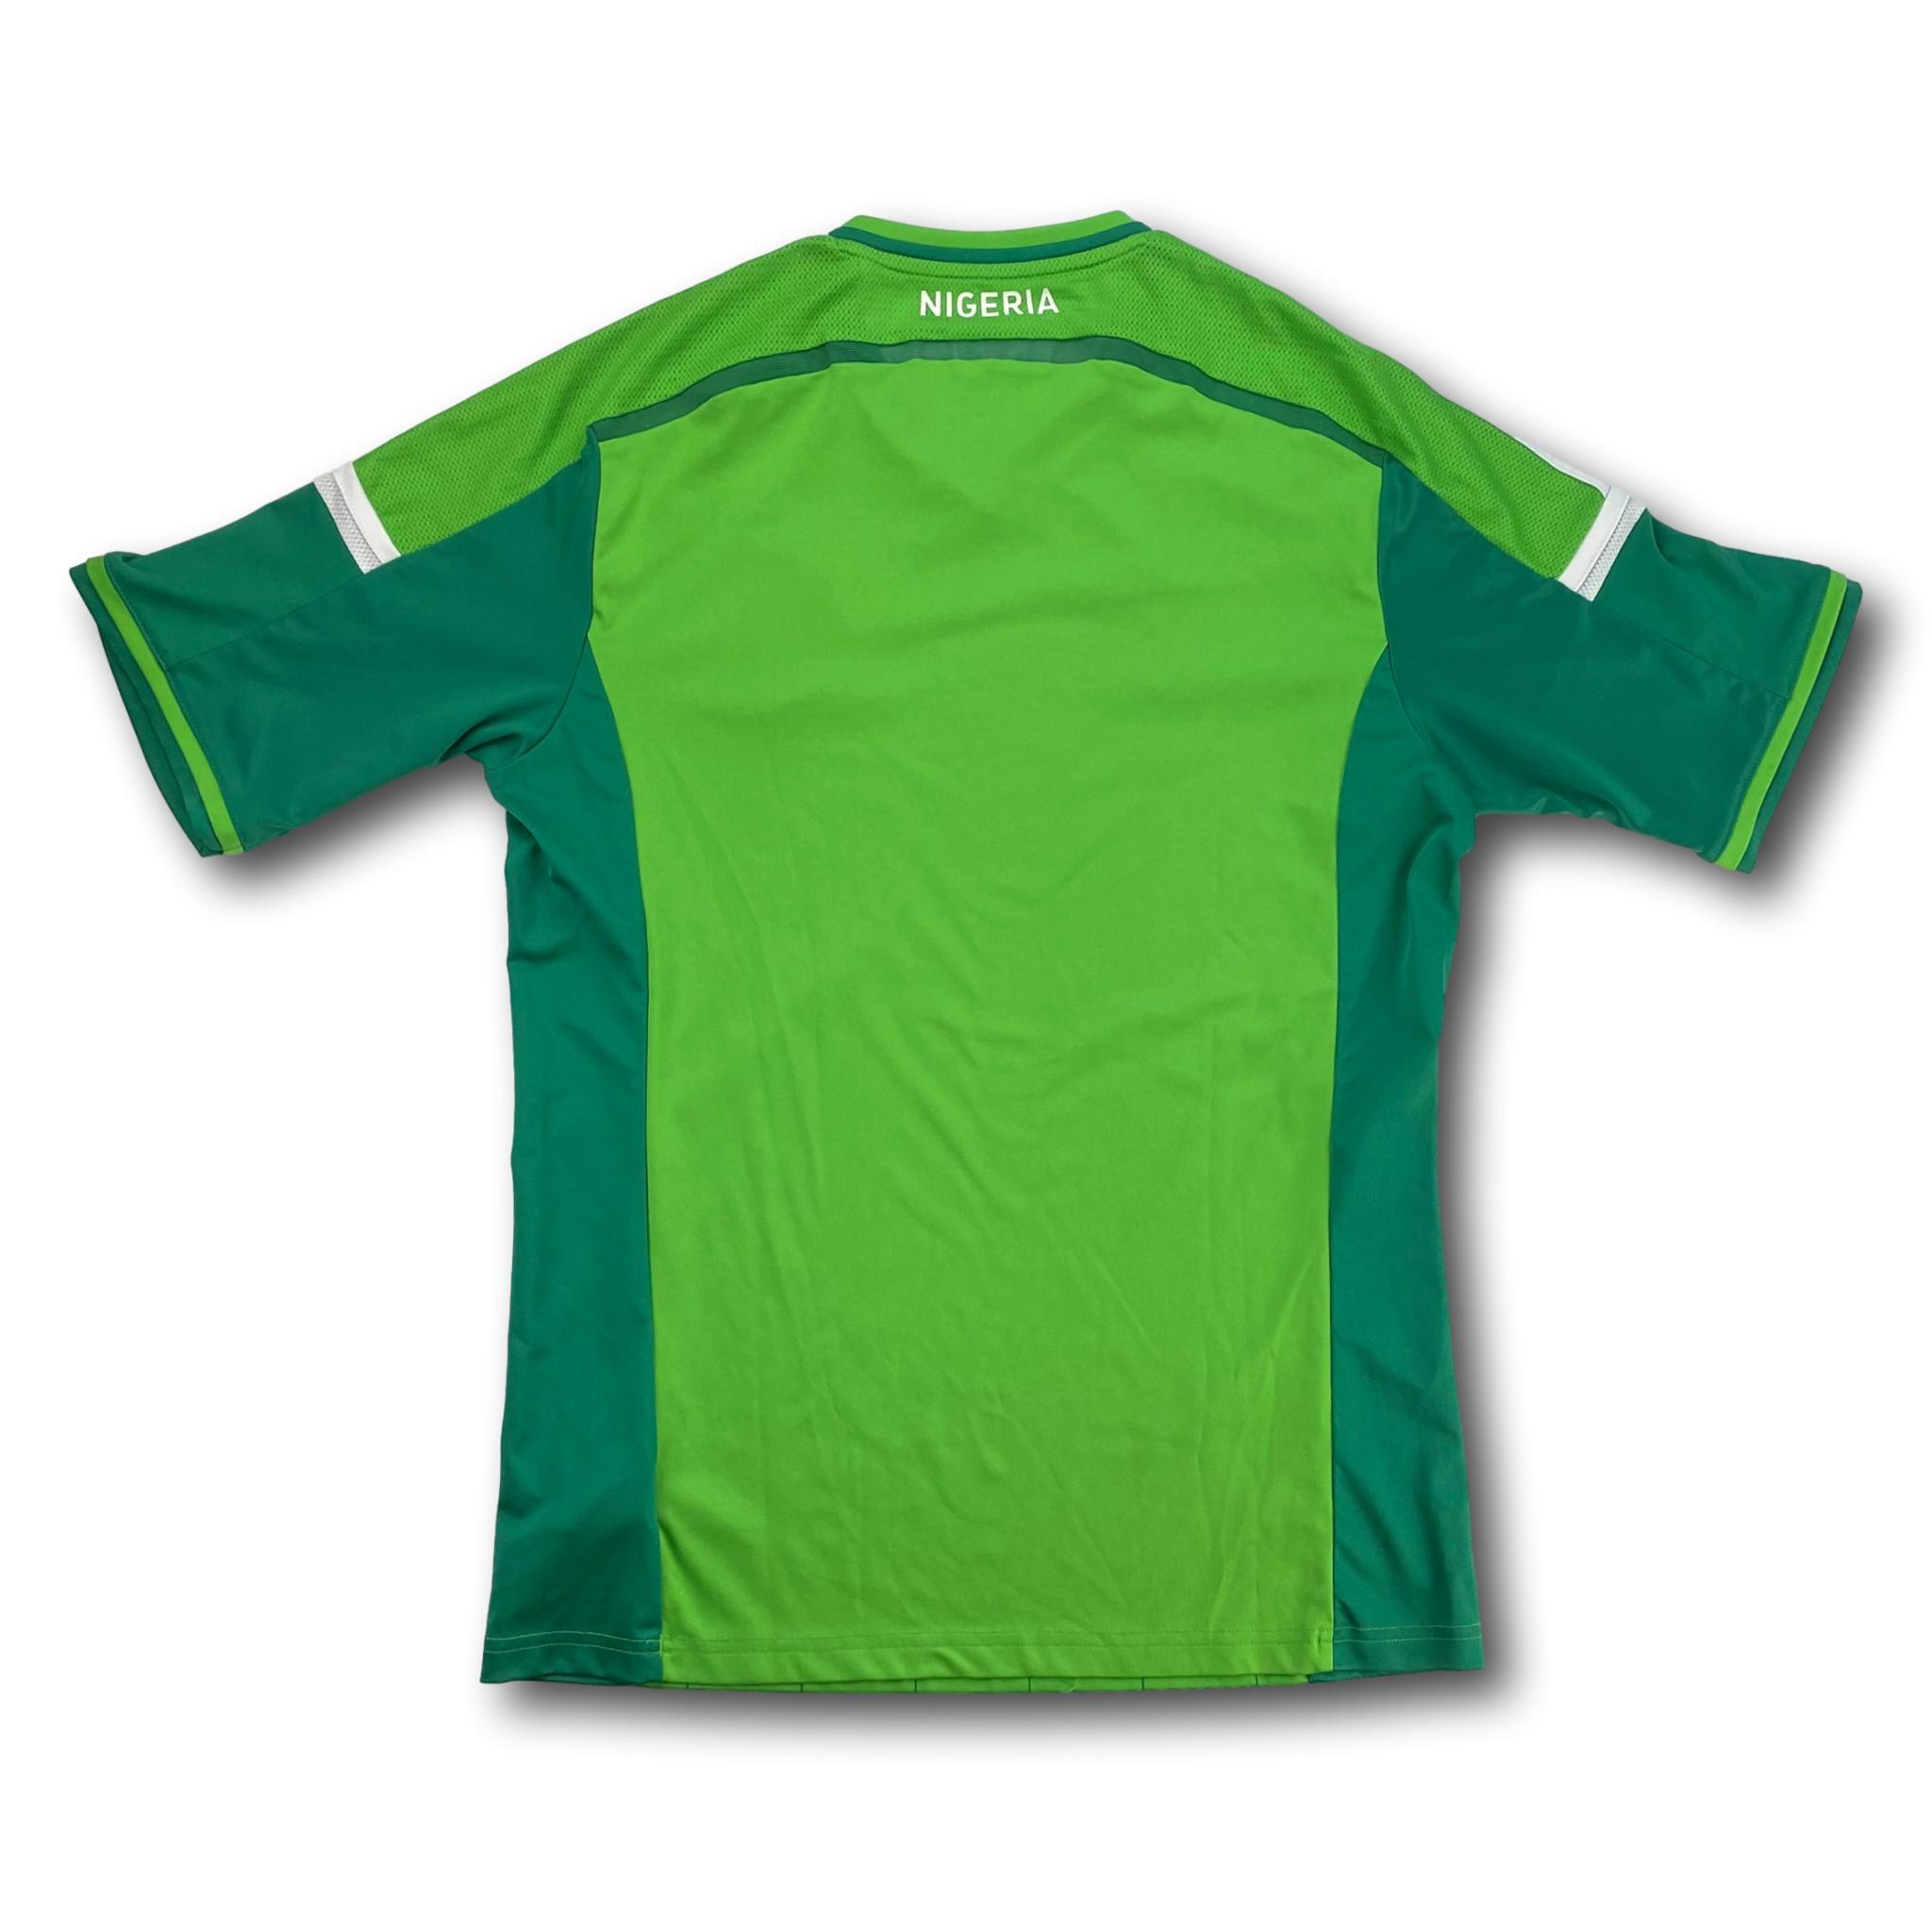 Nigeria 2014-15 Heim M adidas